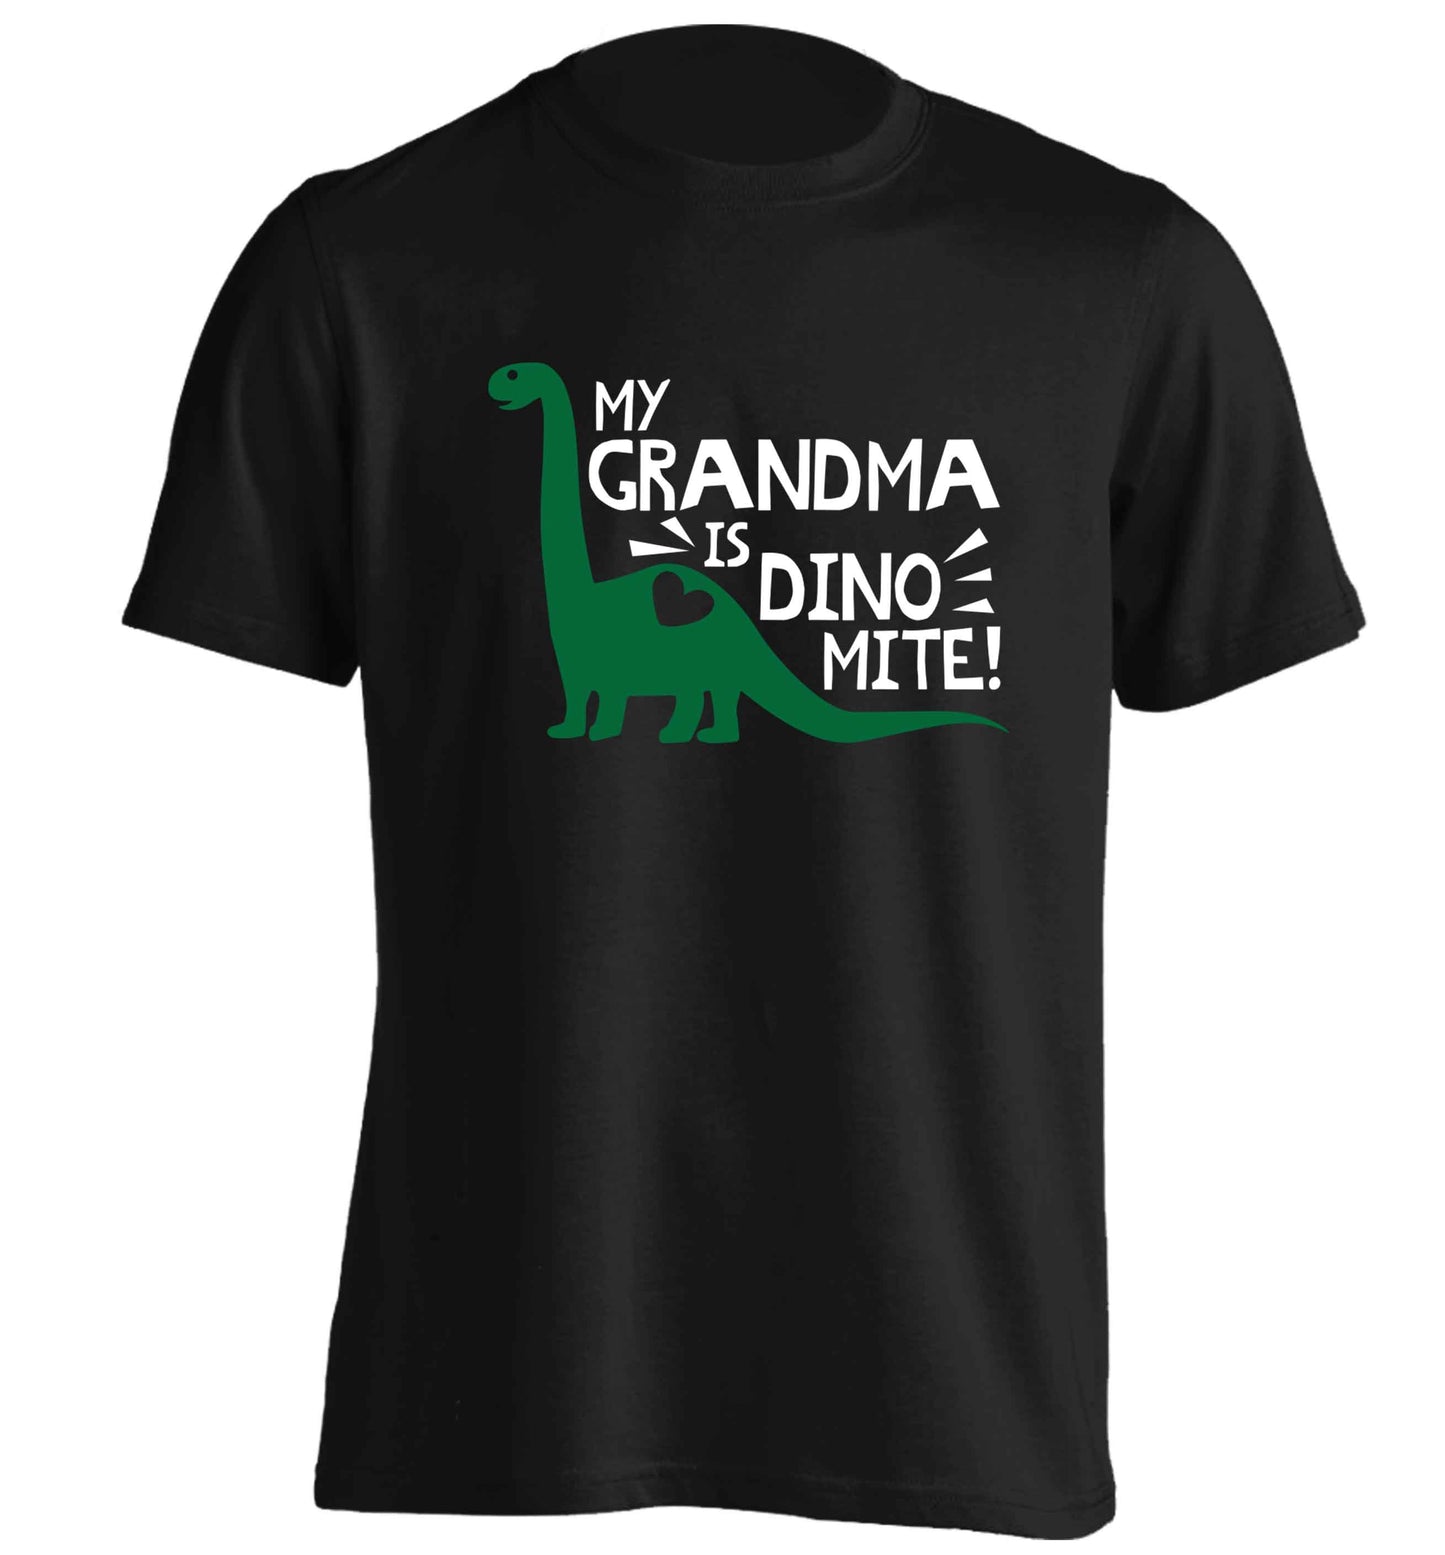 My grandma is dinomite! adults unisex black Tshirt 2XL